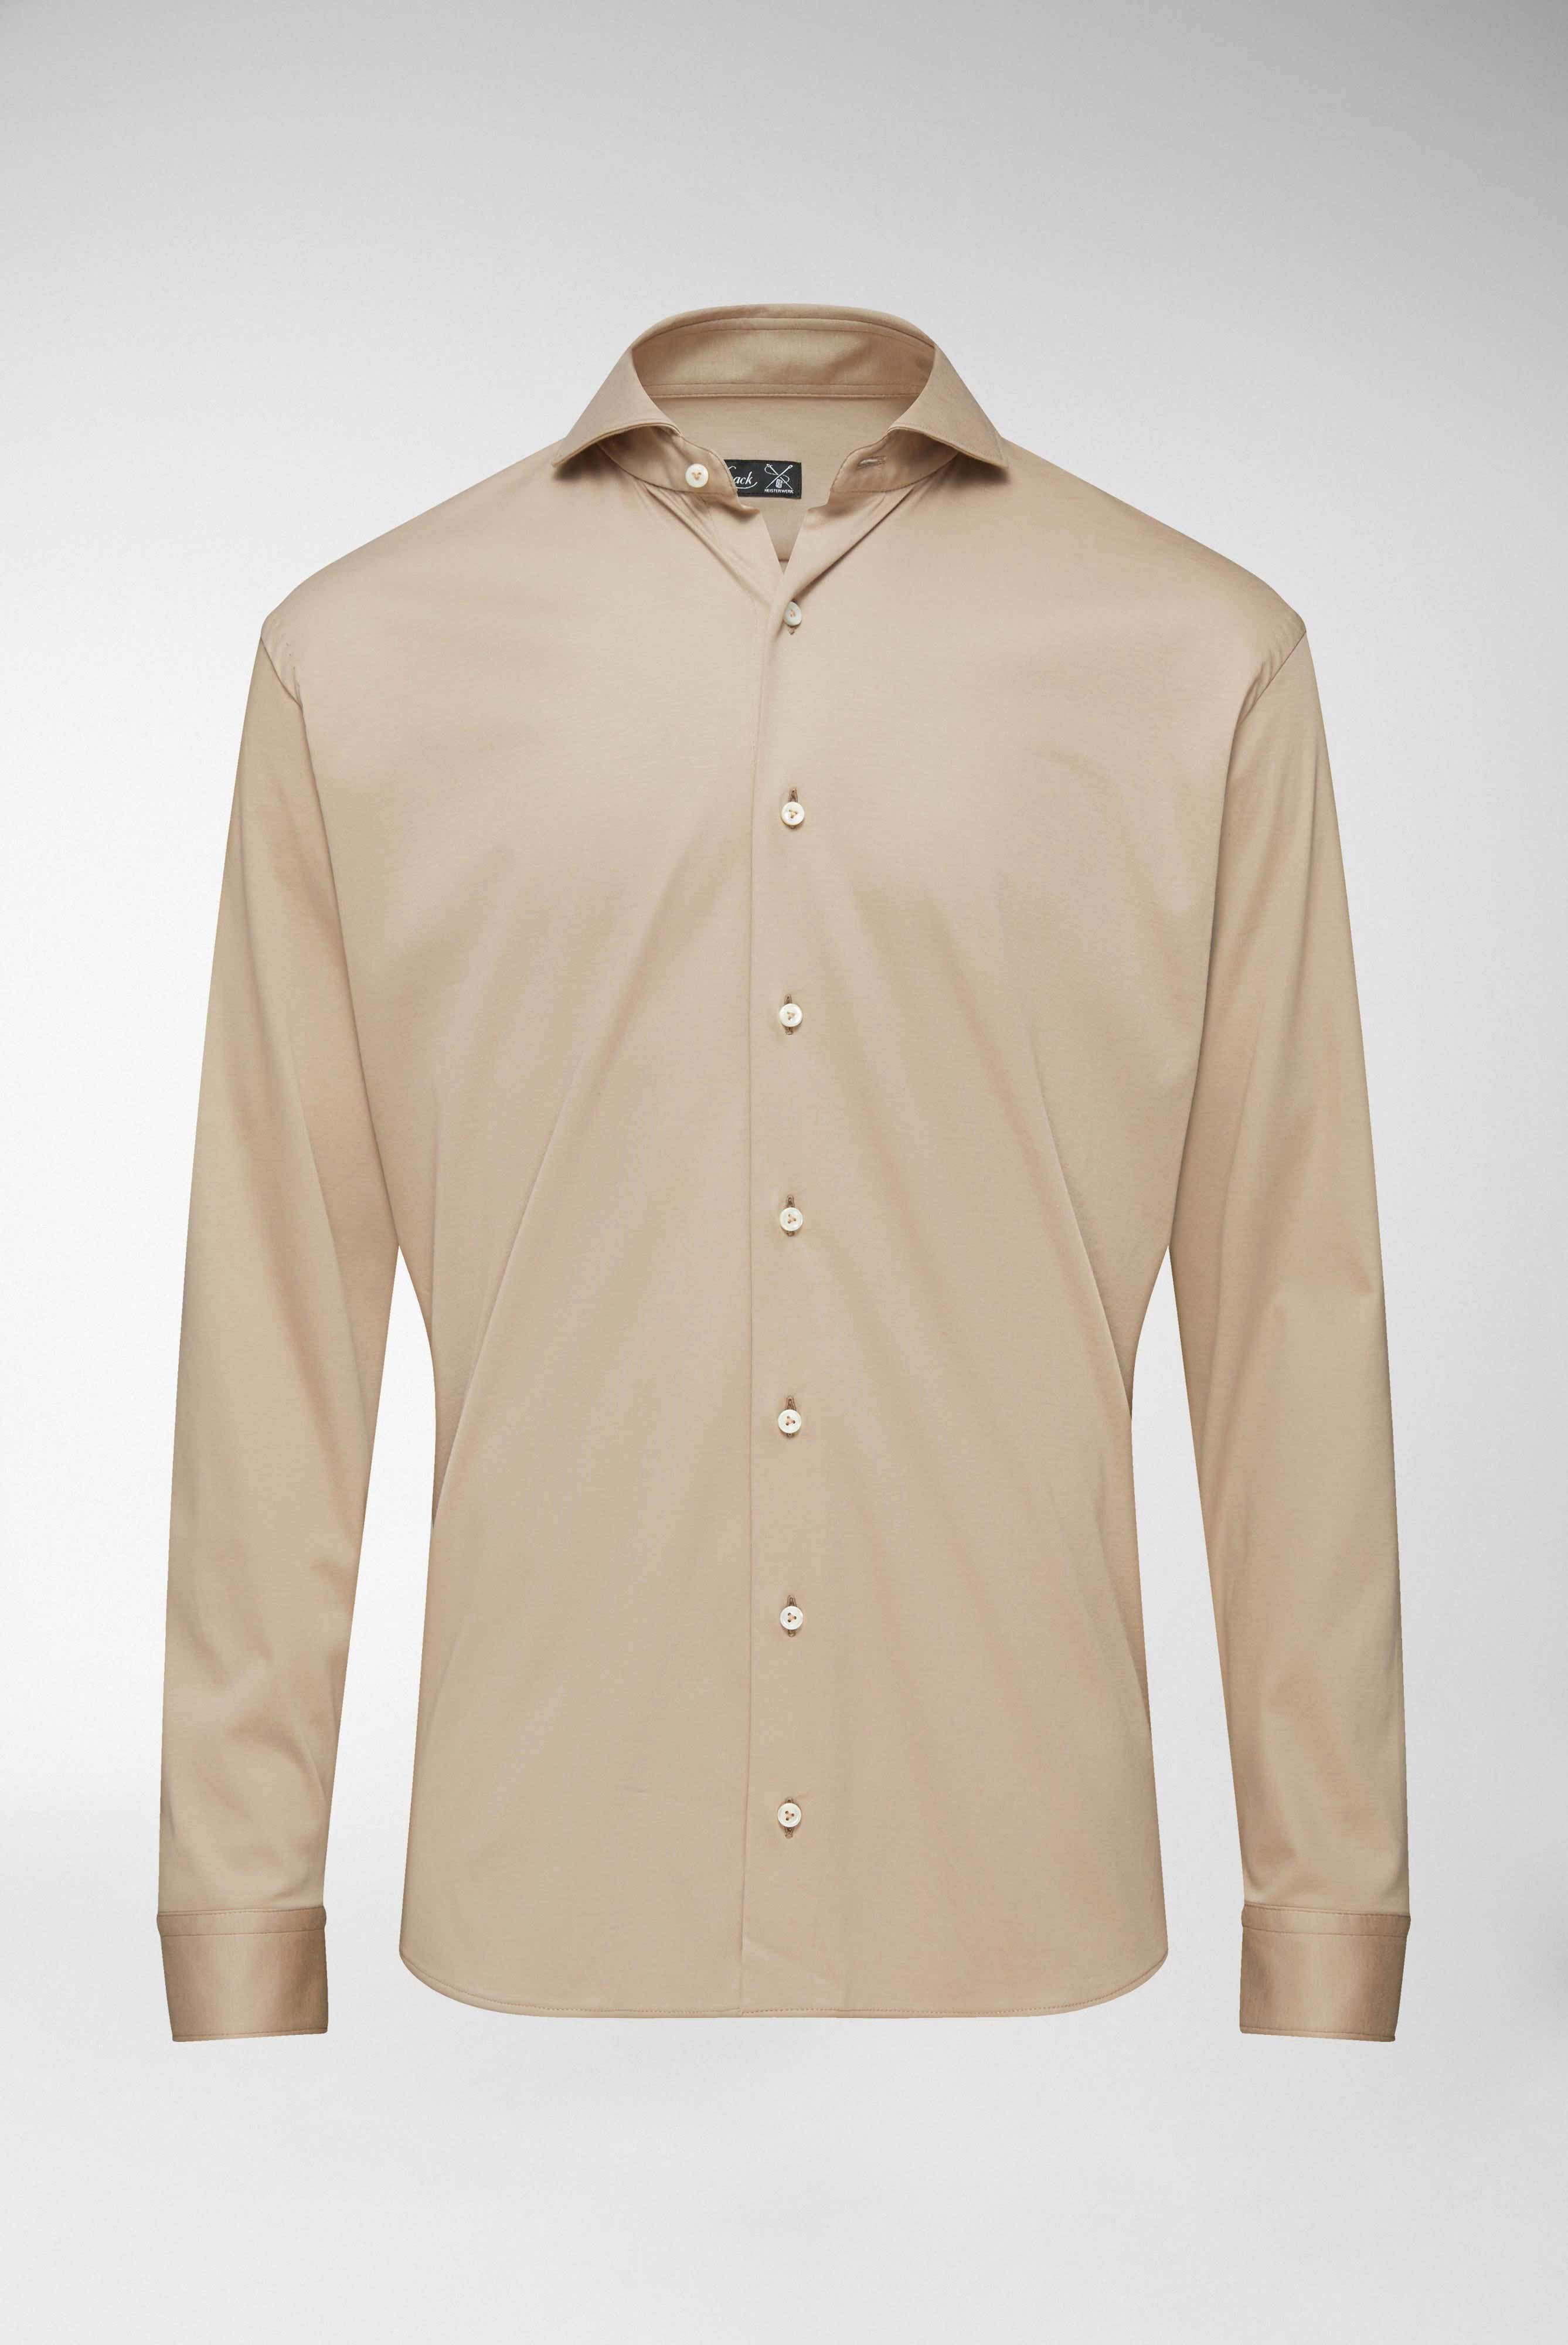 Jersey Shirt Swiss Cotton Tailor Fit